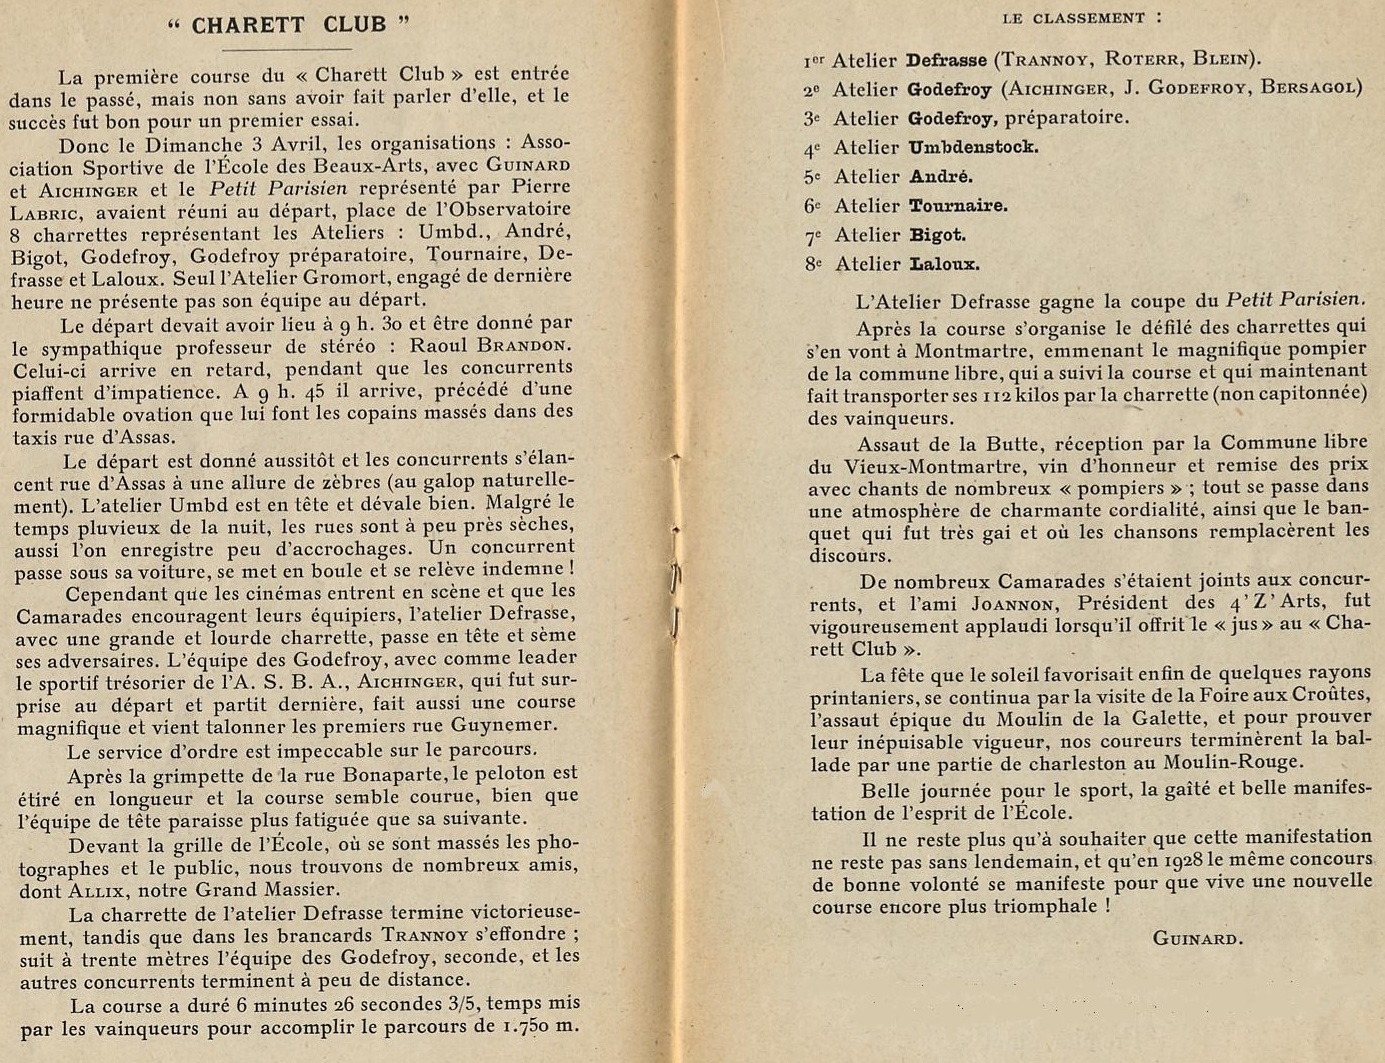 Charrette-club_Course-1927_Article-01.jpg